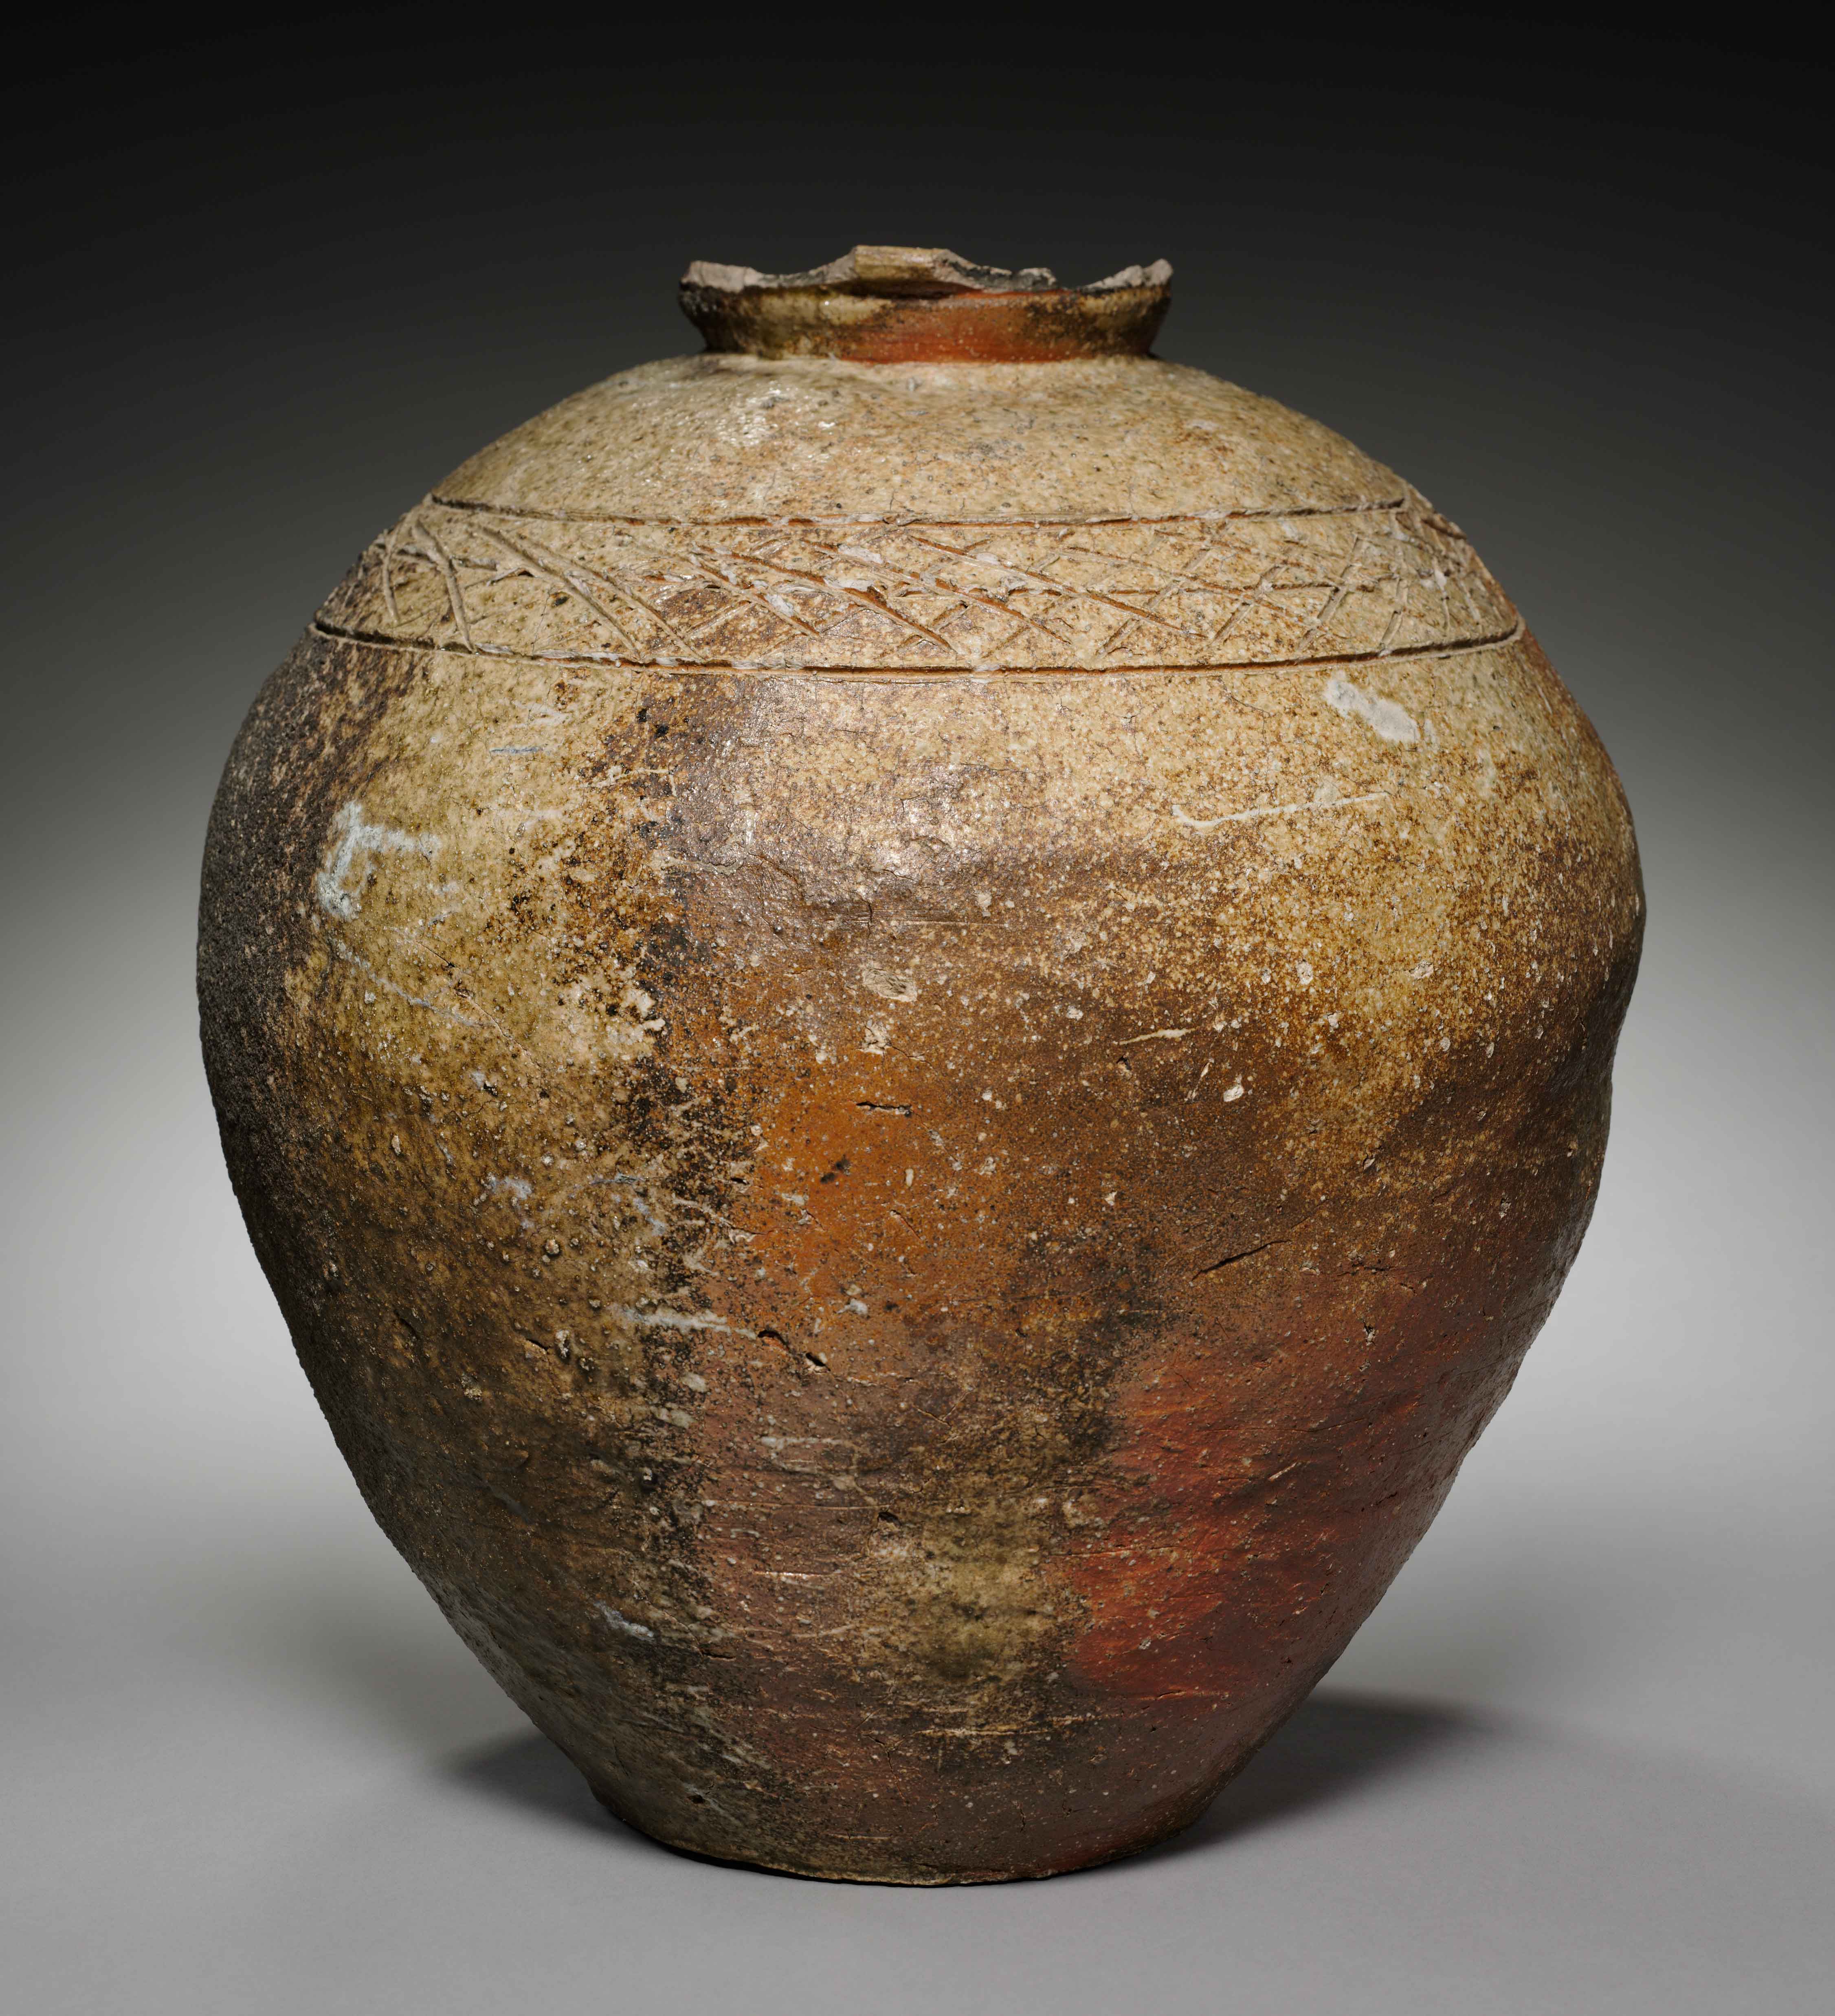 Storage jar, Muromachi period, late 14th-15th century, stoneware with natural ash glaze, Cleveland Museum of Art, John L Severance Fund, 1973